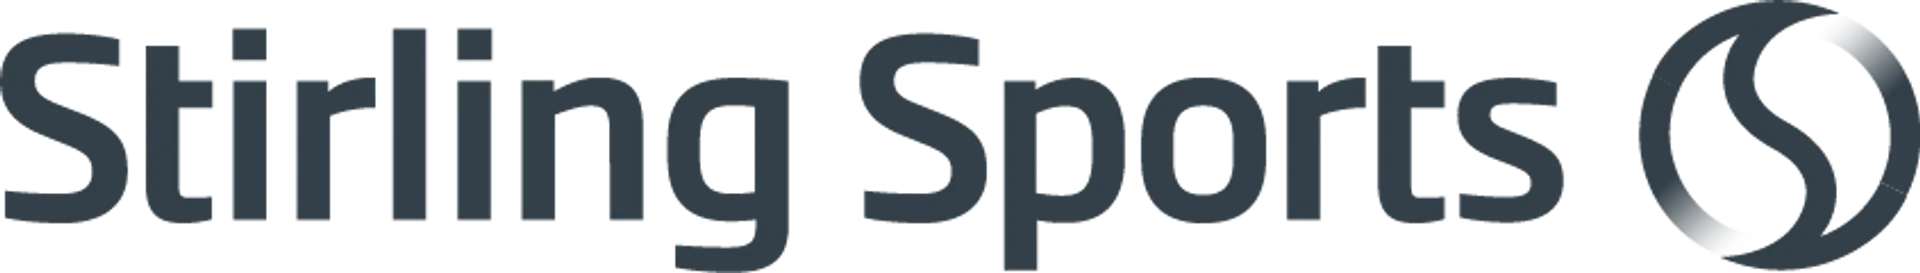 STIRLING SPORTS logo